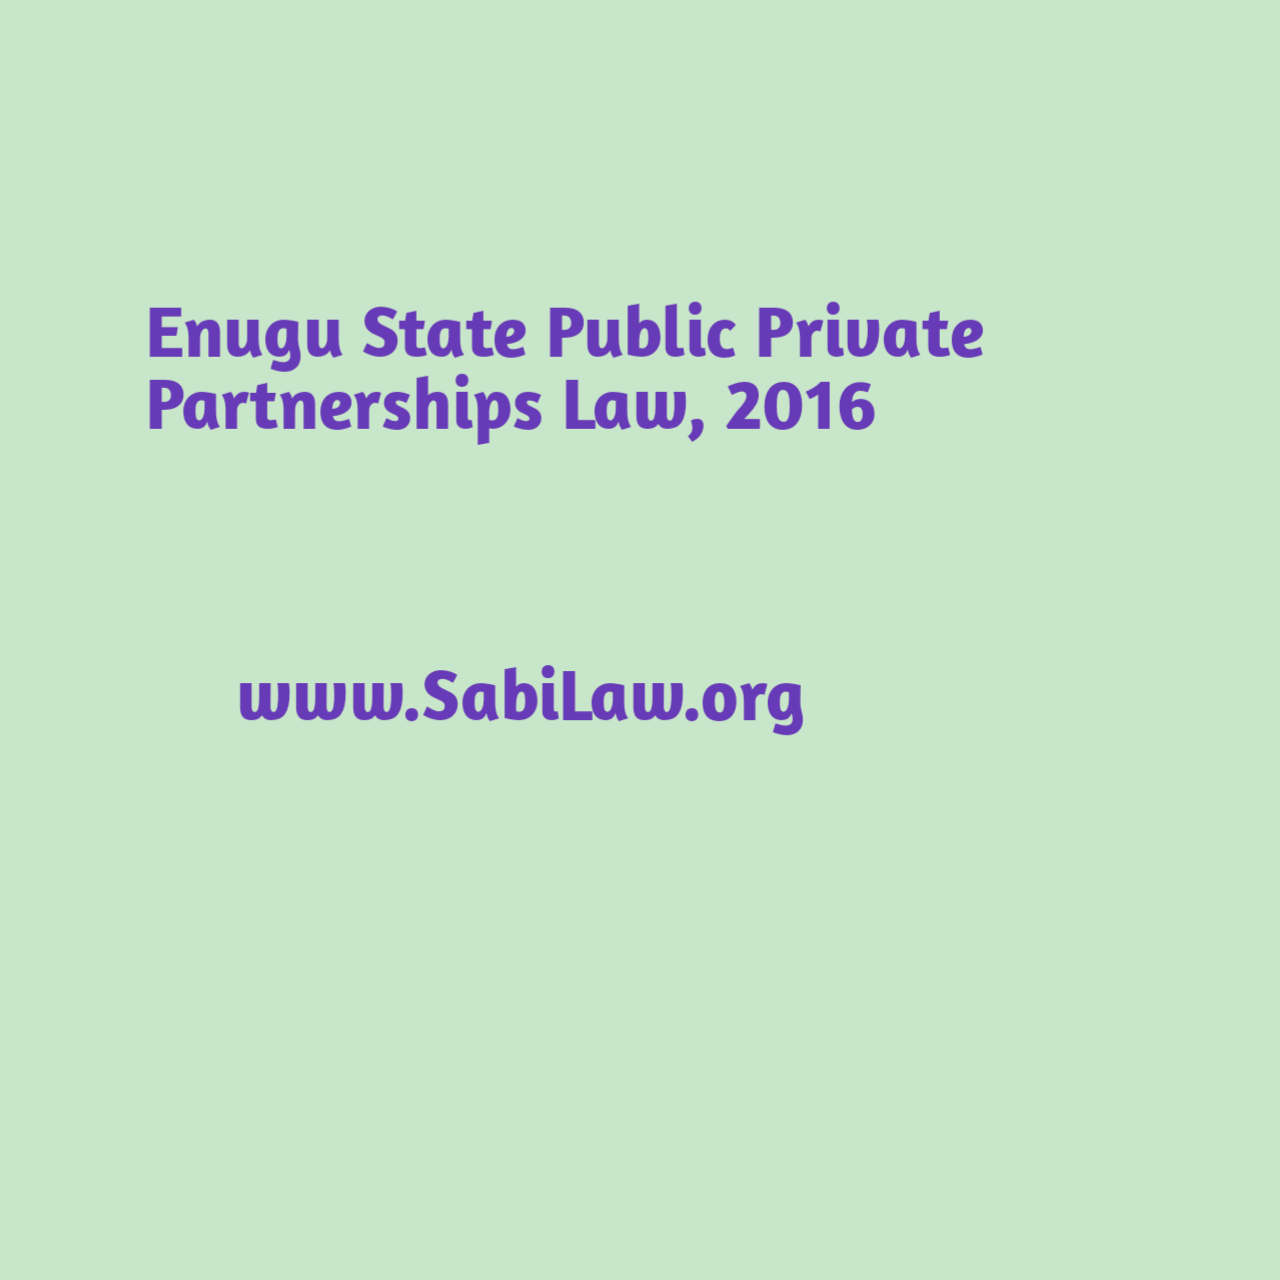 Enugu State Public Private Partnerships Law, 2016